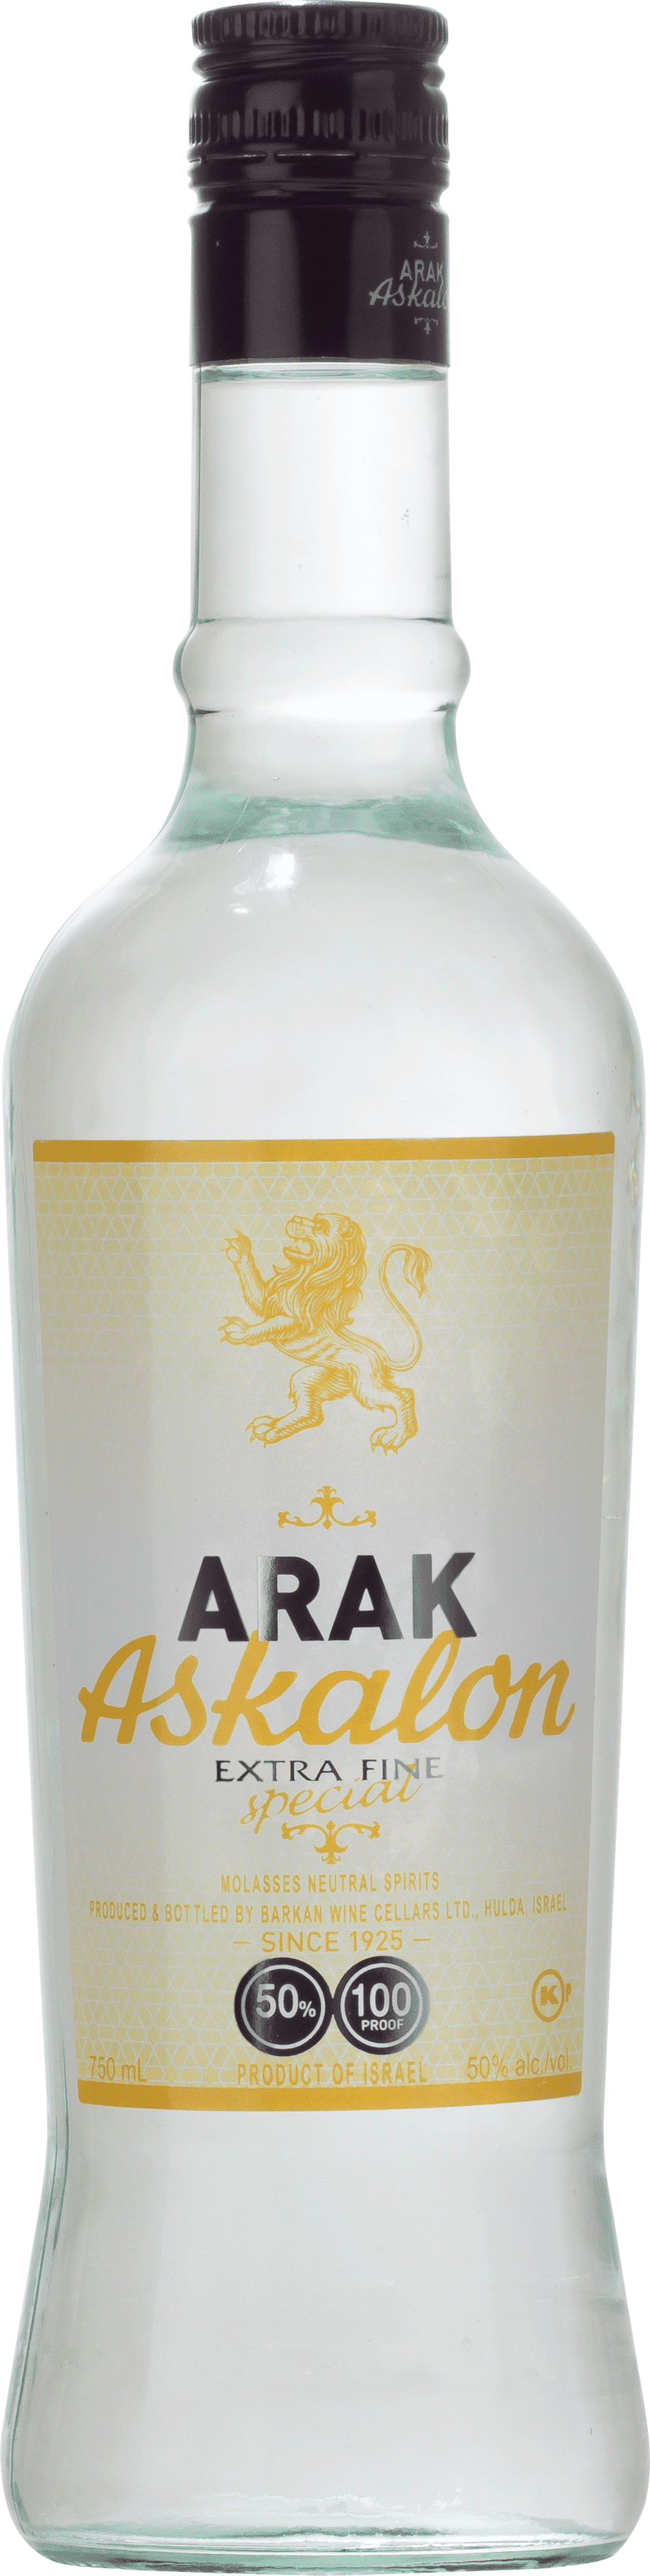 Arak Askalon 100 Proof 750 ml - Liquor Luxe